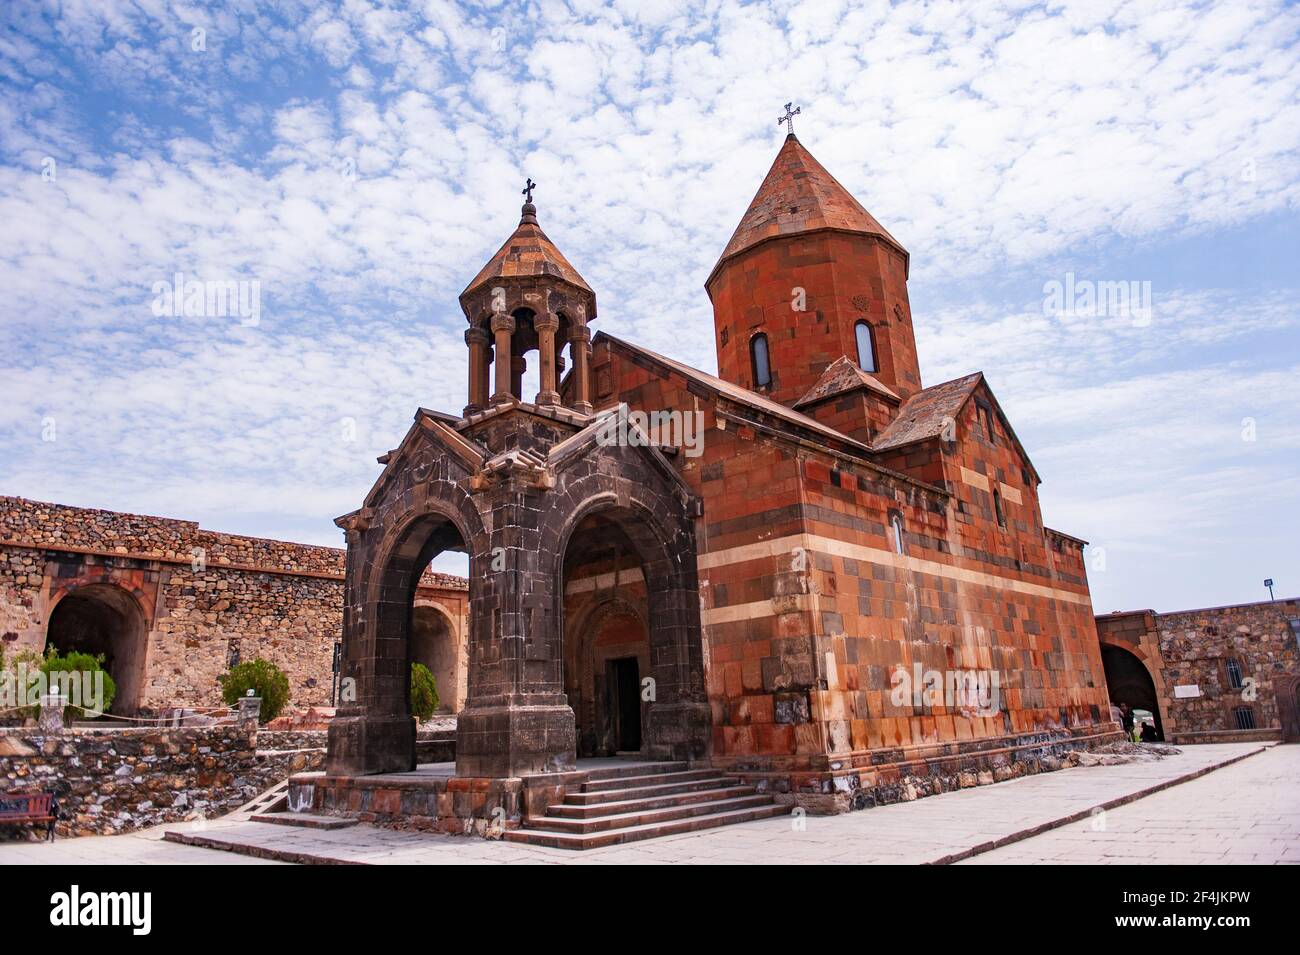 Khor Virap, Armenia - July 18, 2015: The Church of the Holy Mother of God of the Khor Virap monastery in Armenia, a major pilgrimage site Stock Photo